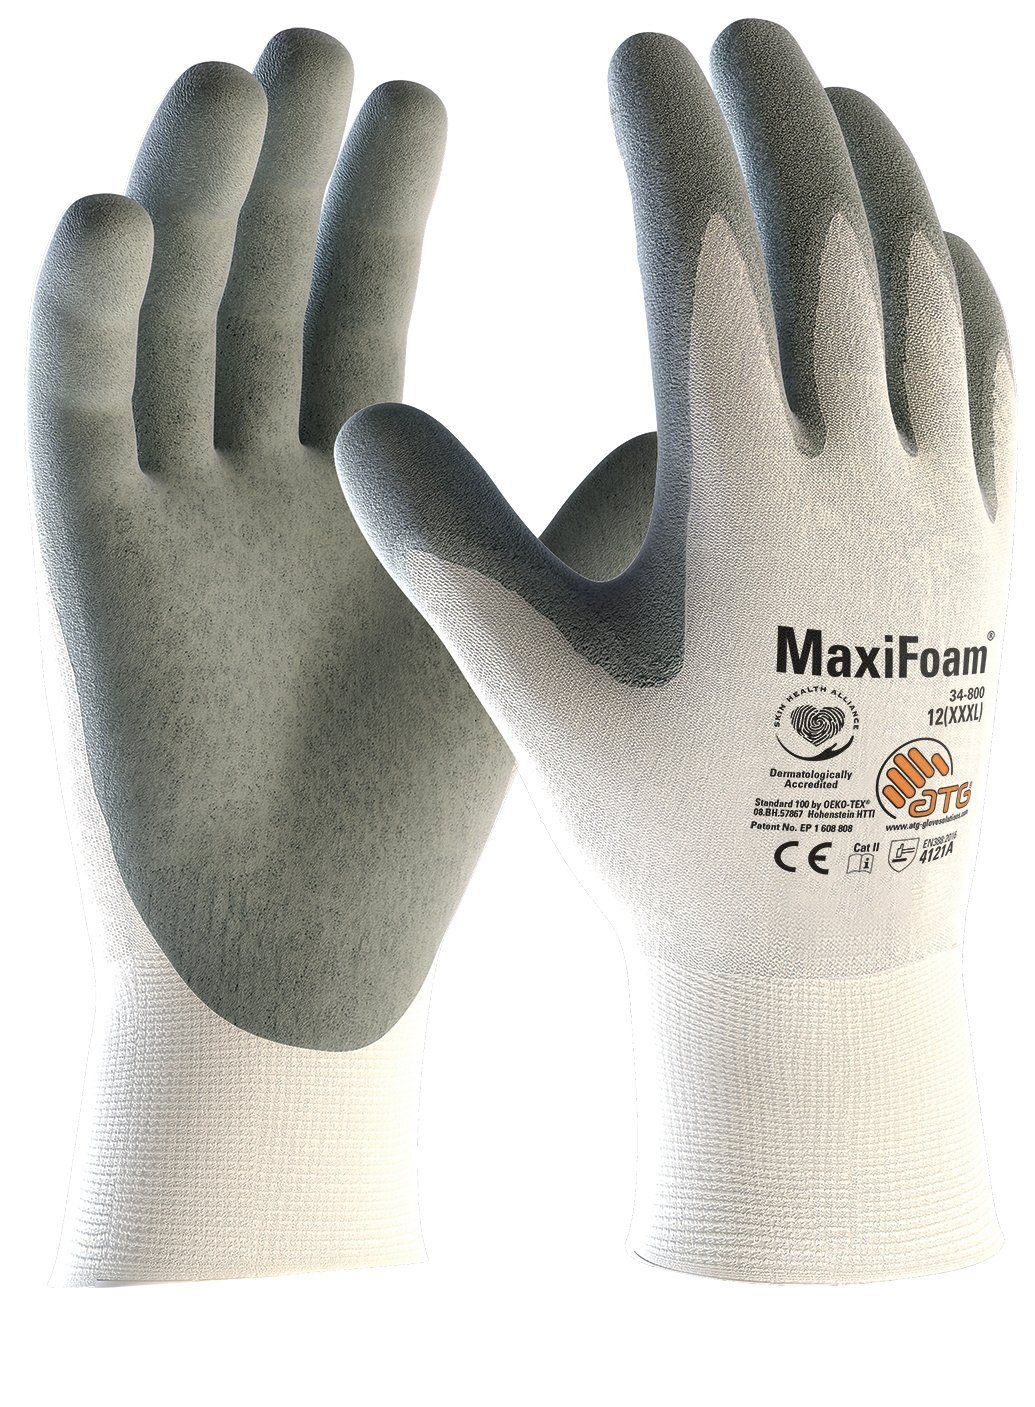 12 ATG (34-800) Paar Nitril-Handschuhe "MaxiFoam"